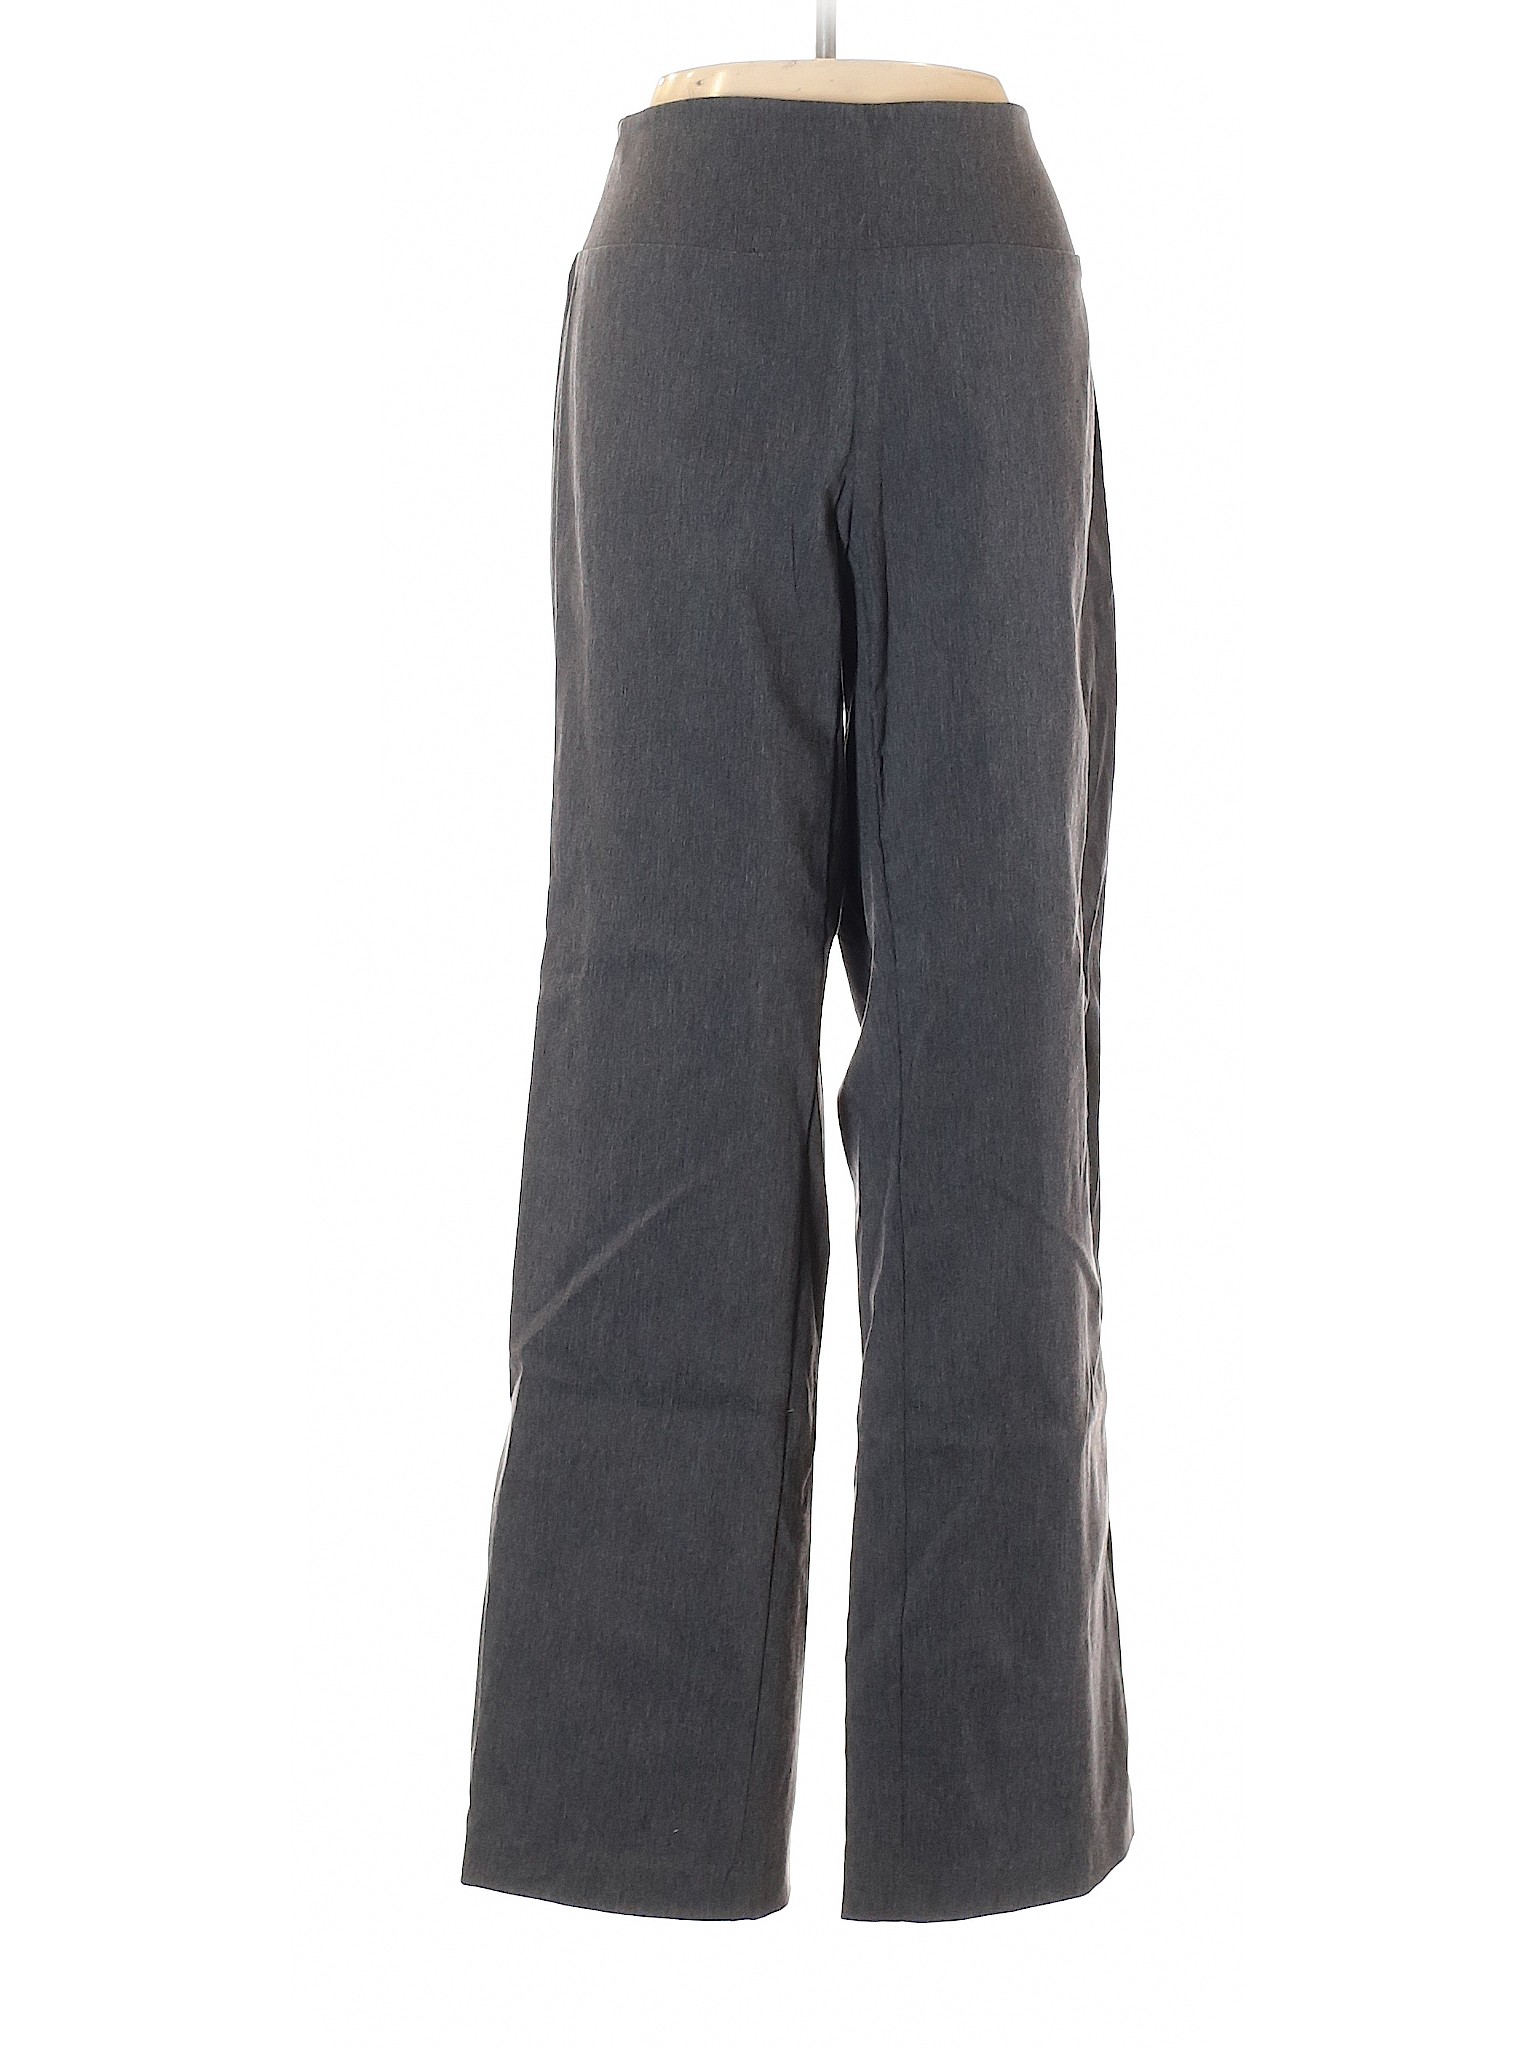 Alyx Women Gray Dress Pants 0 | eBay